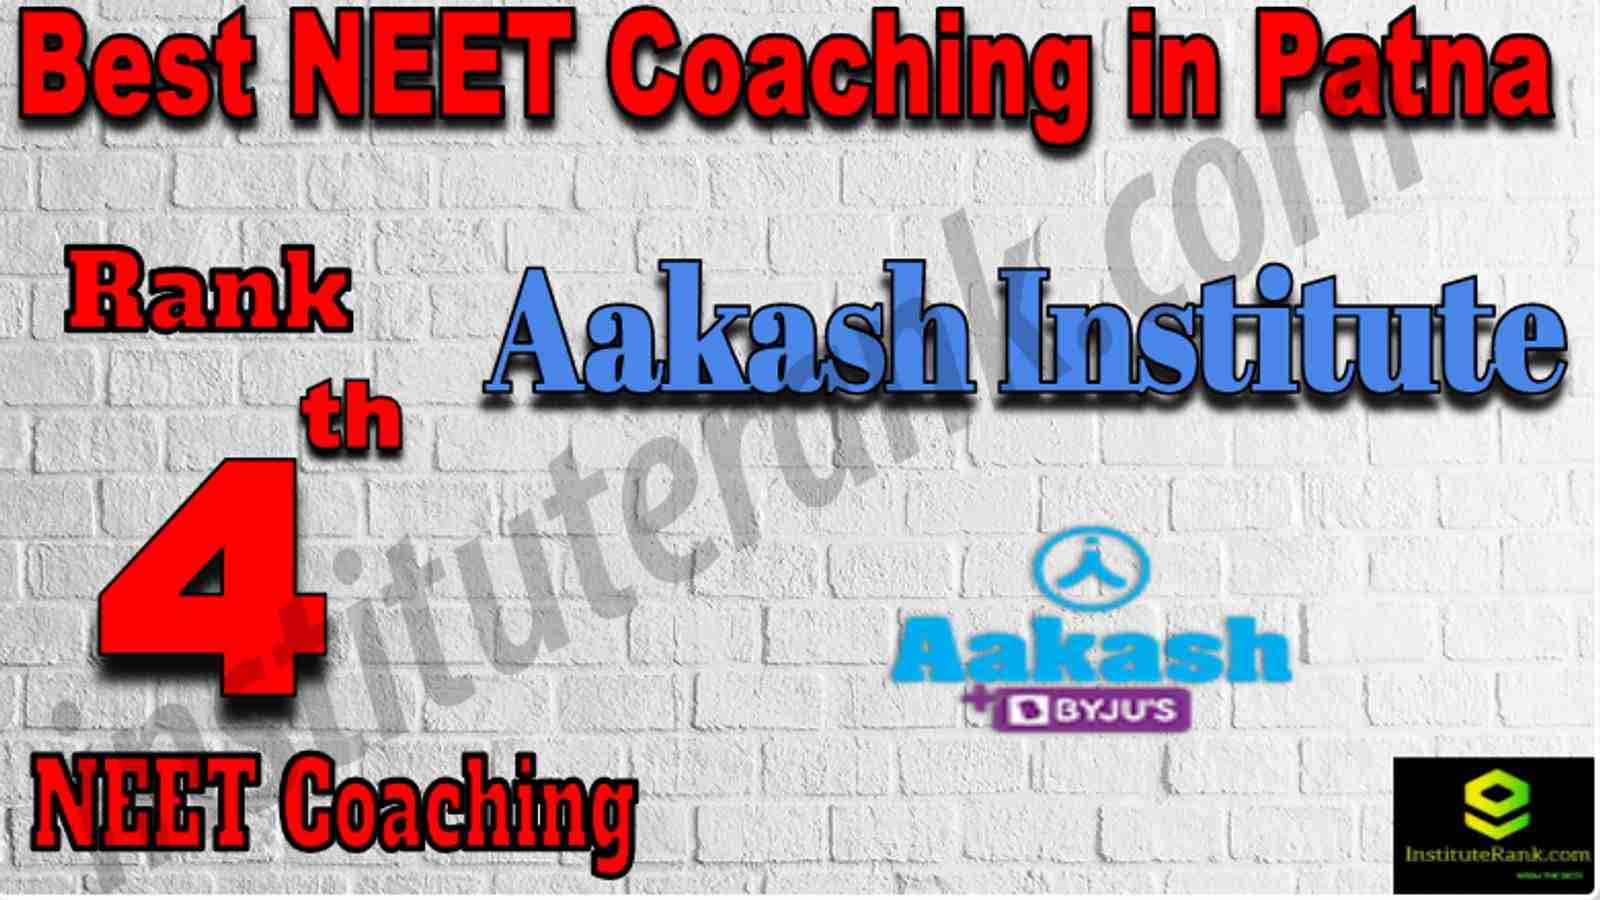 Rank 4 Best NEET Coaching in Patna